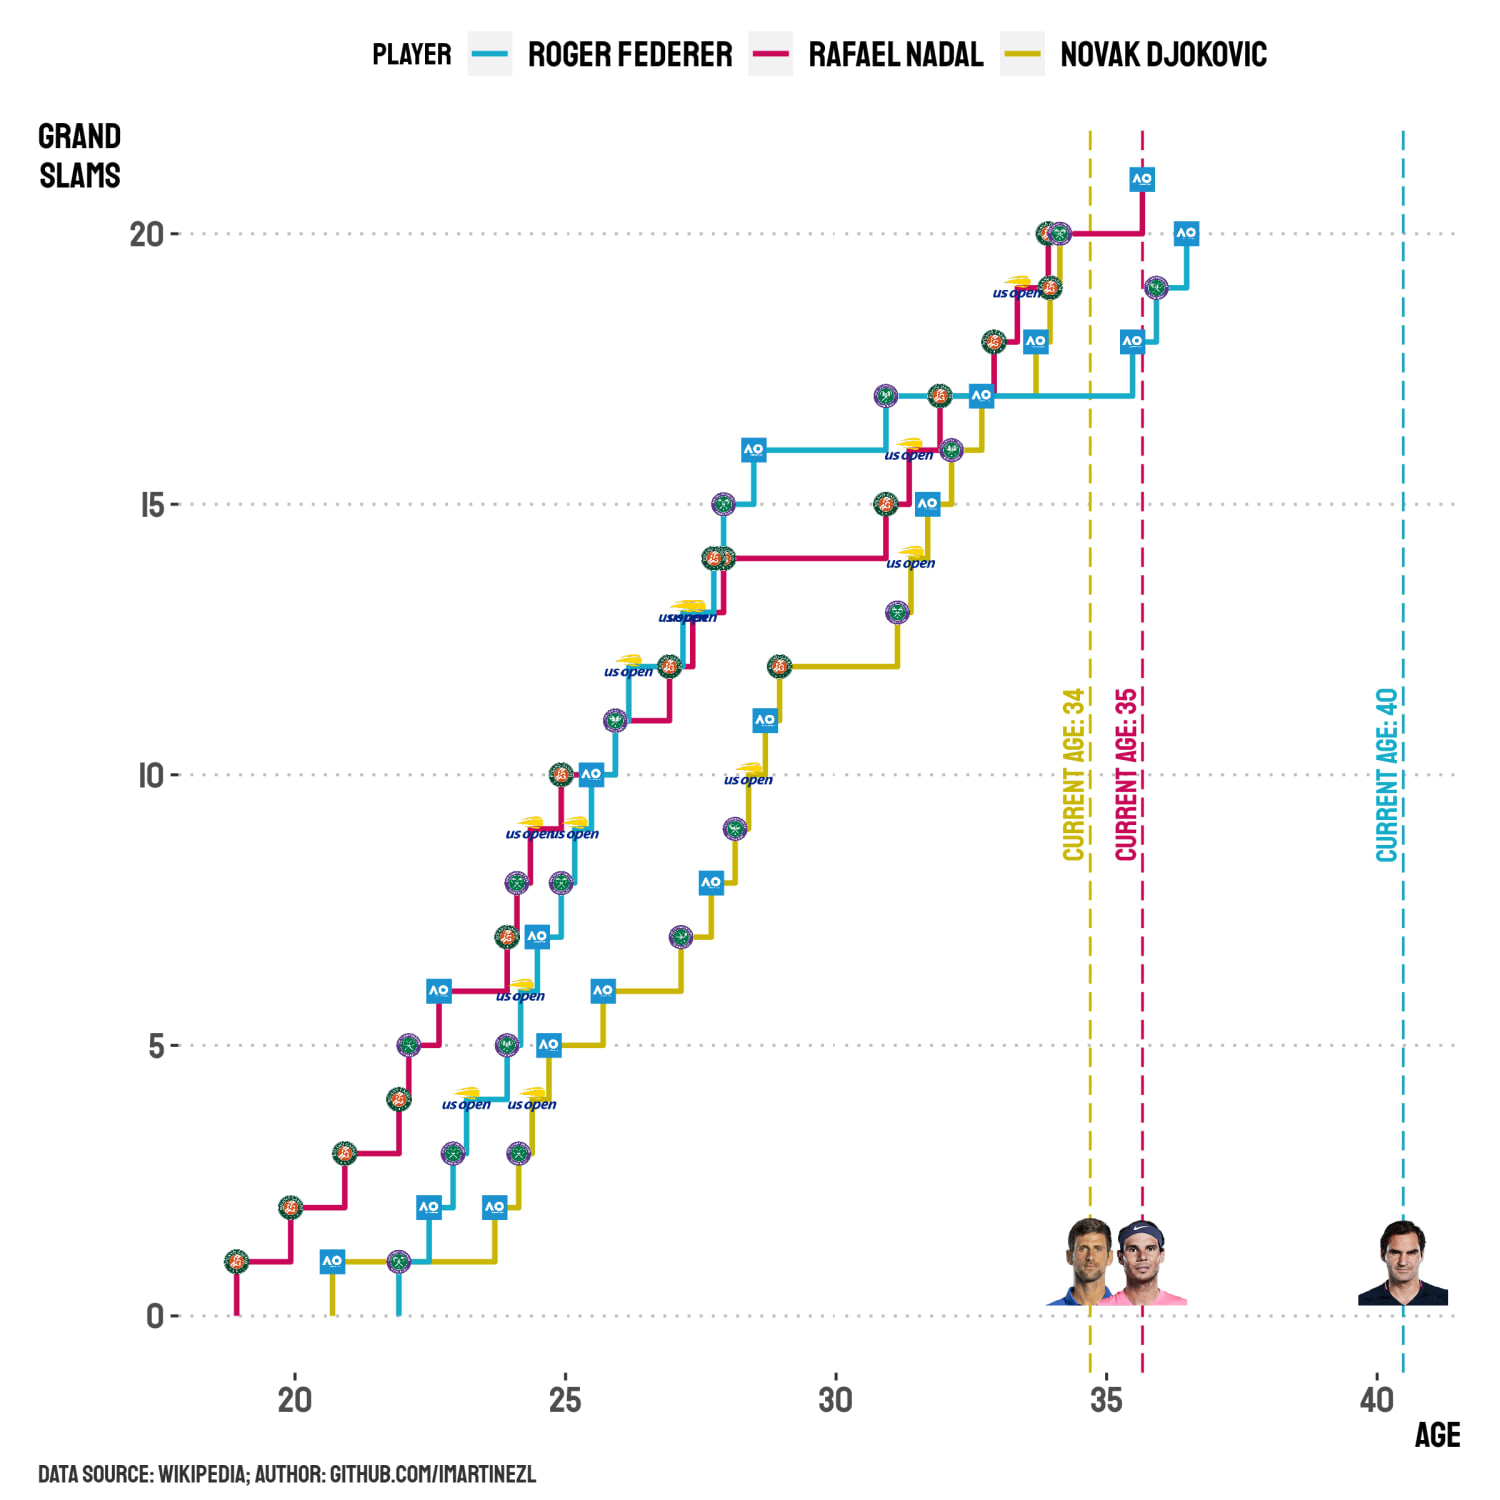 Grand Slams by Federer, Nadal & Djokovic